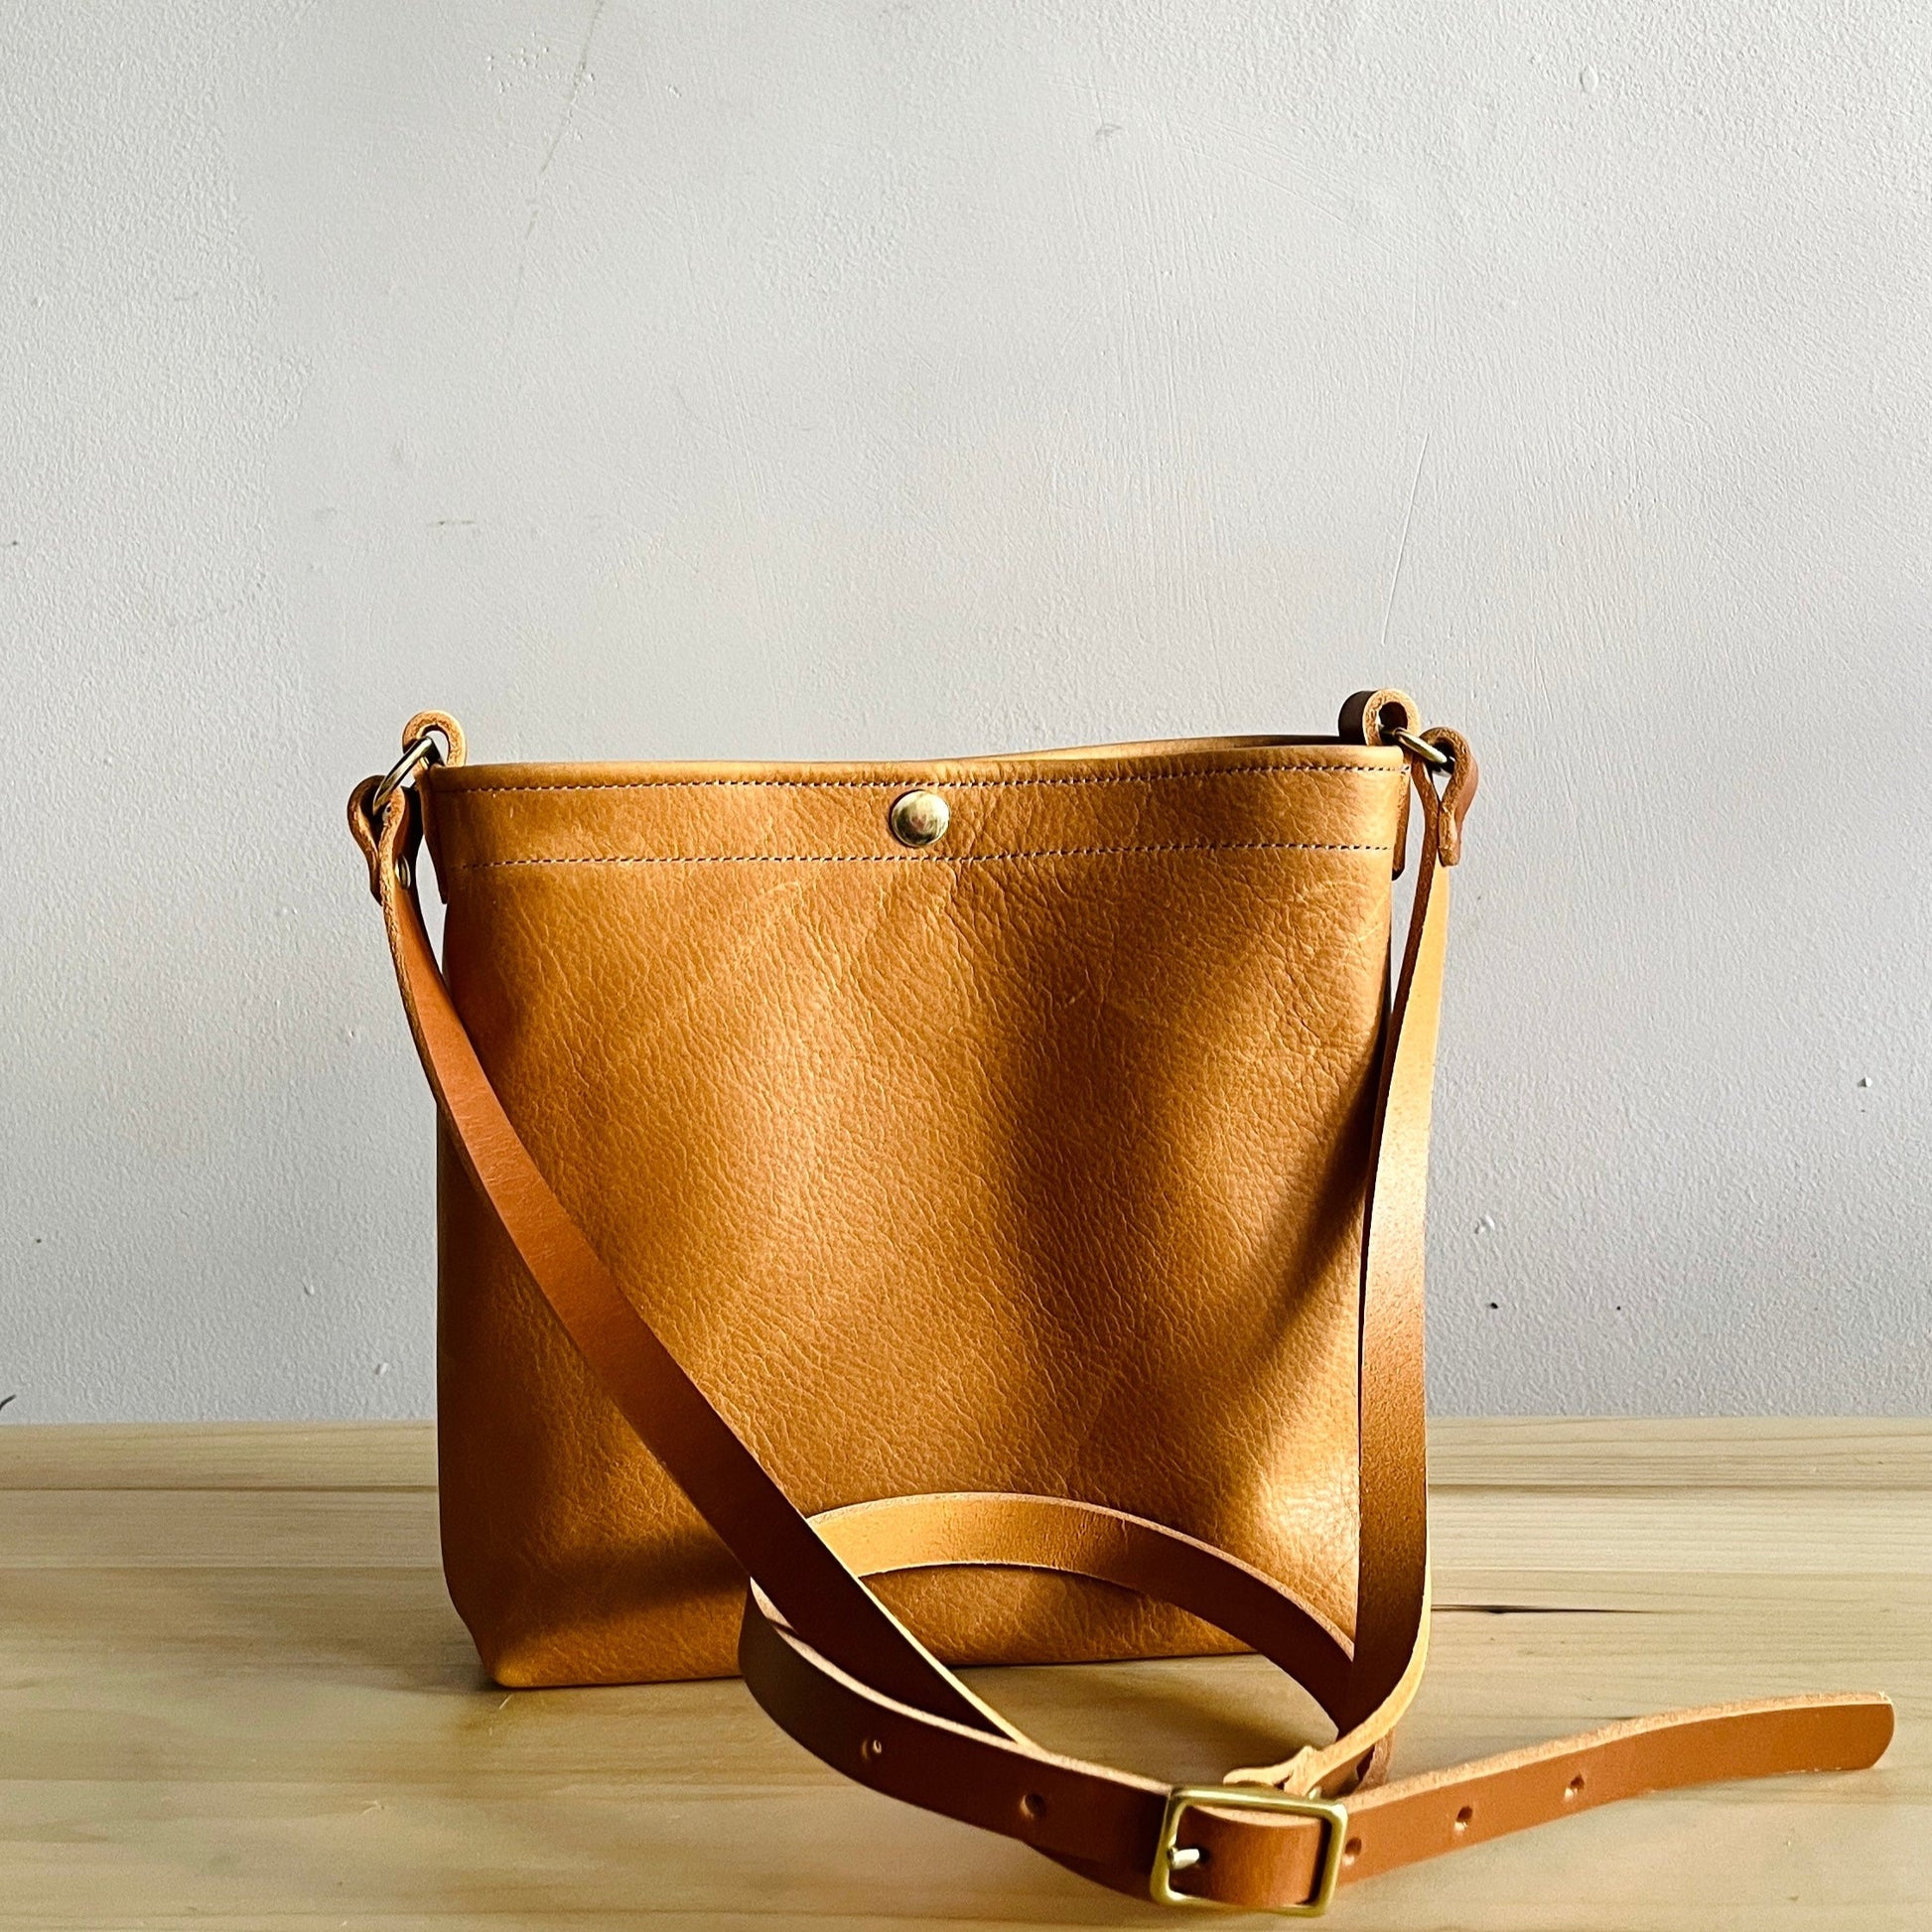 Tan leather snap bag